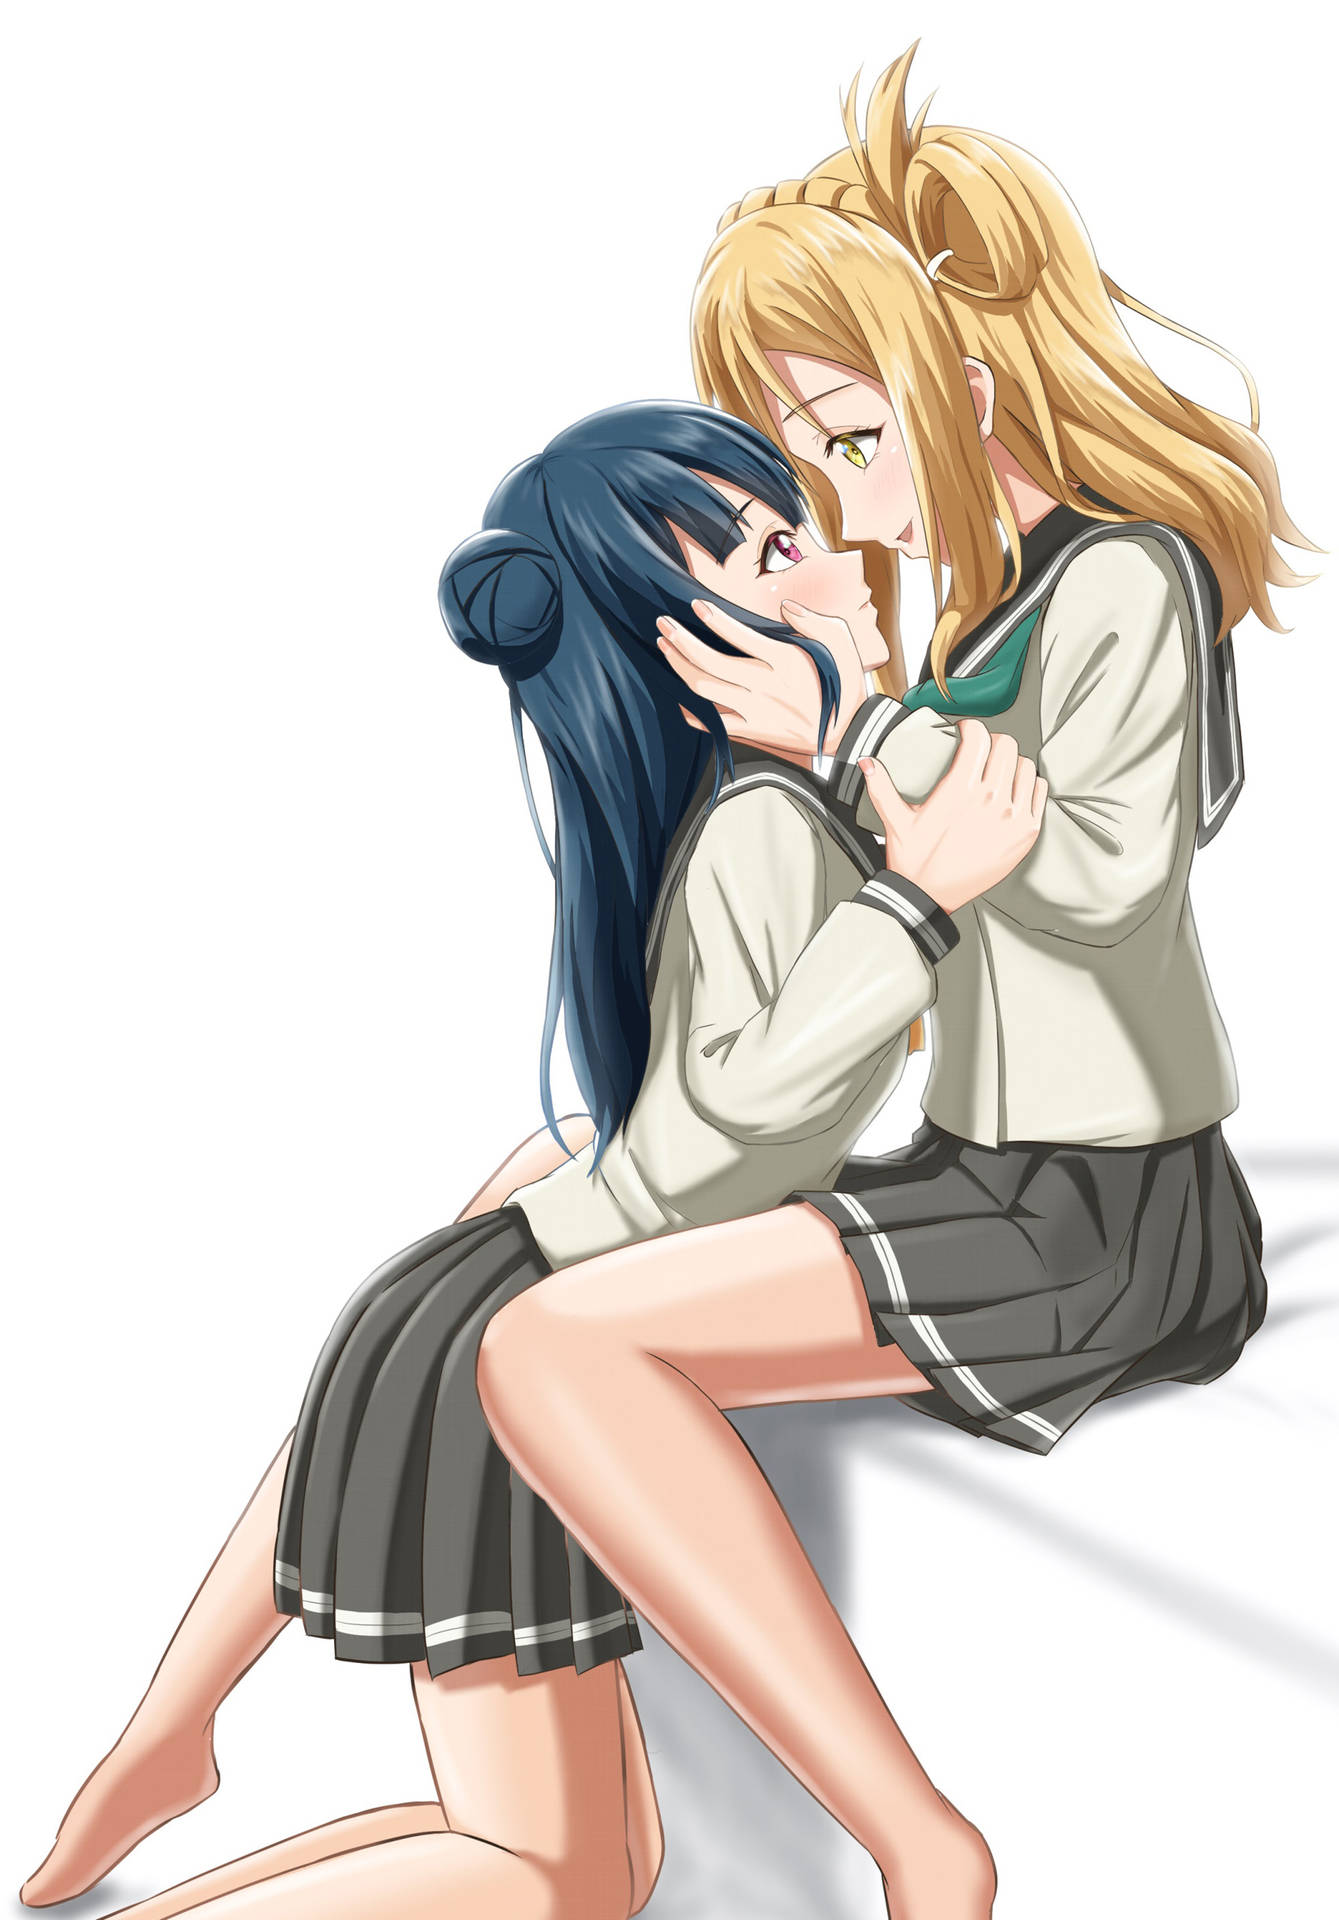 Amorous Anime Lesbian Couple Wallpaper